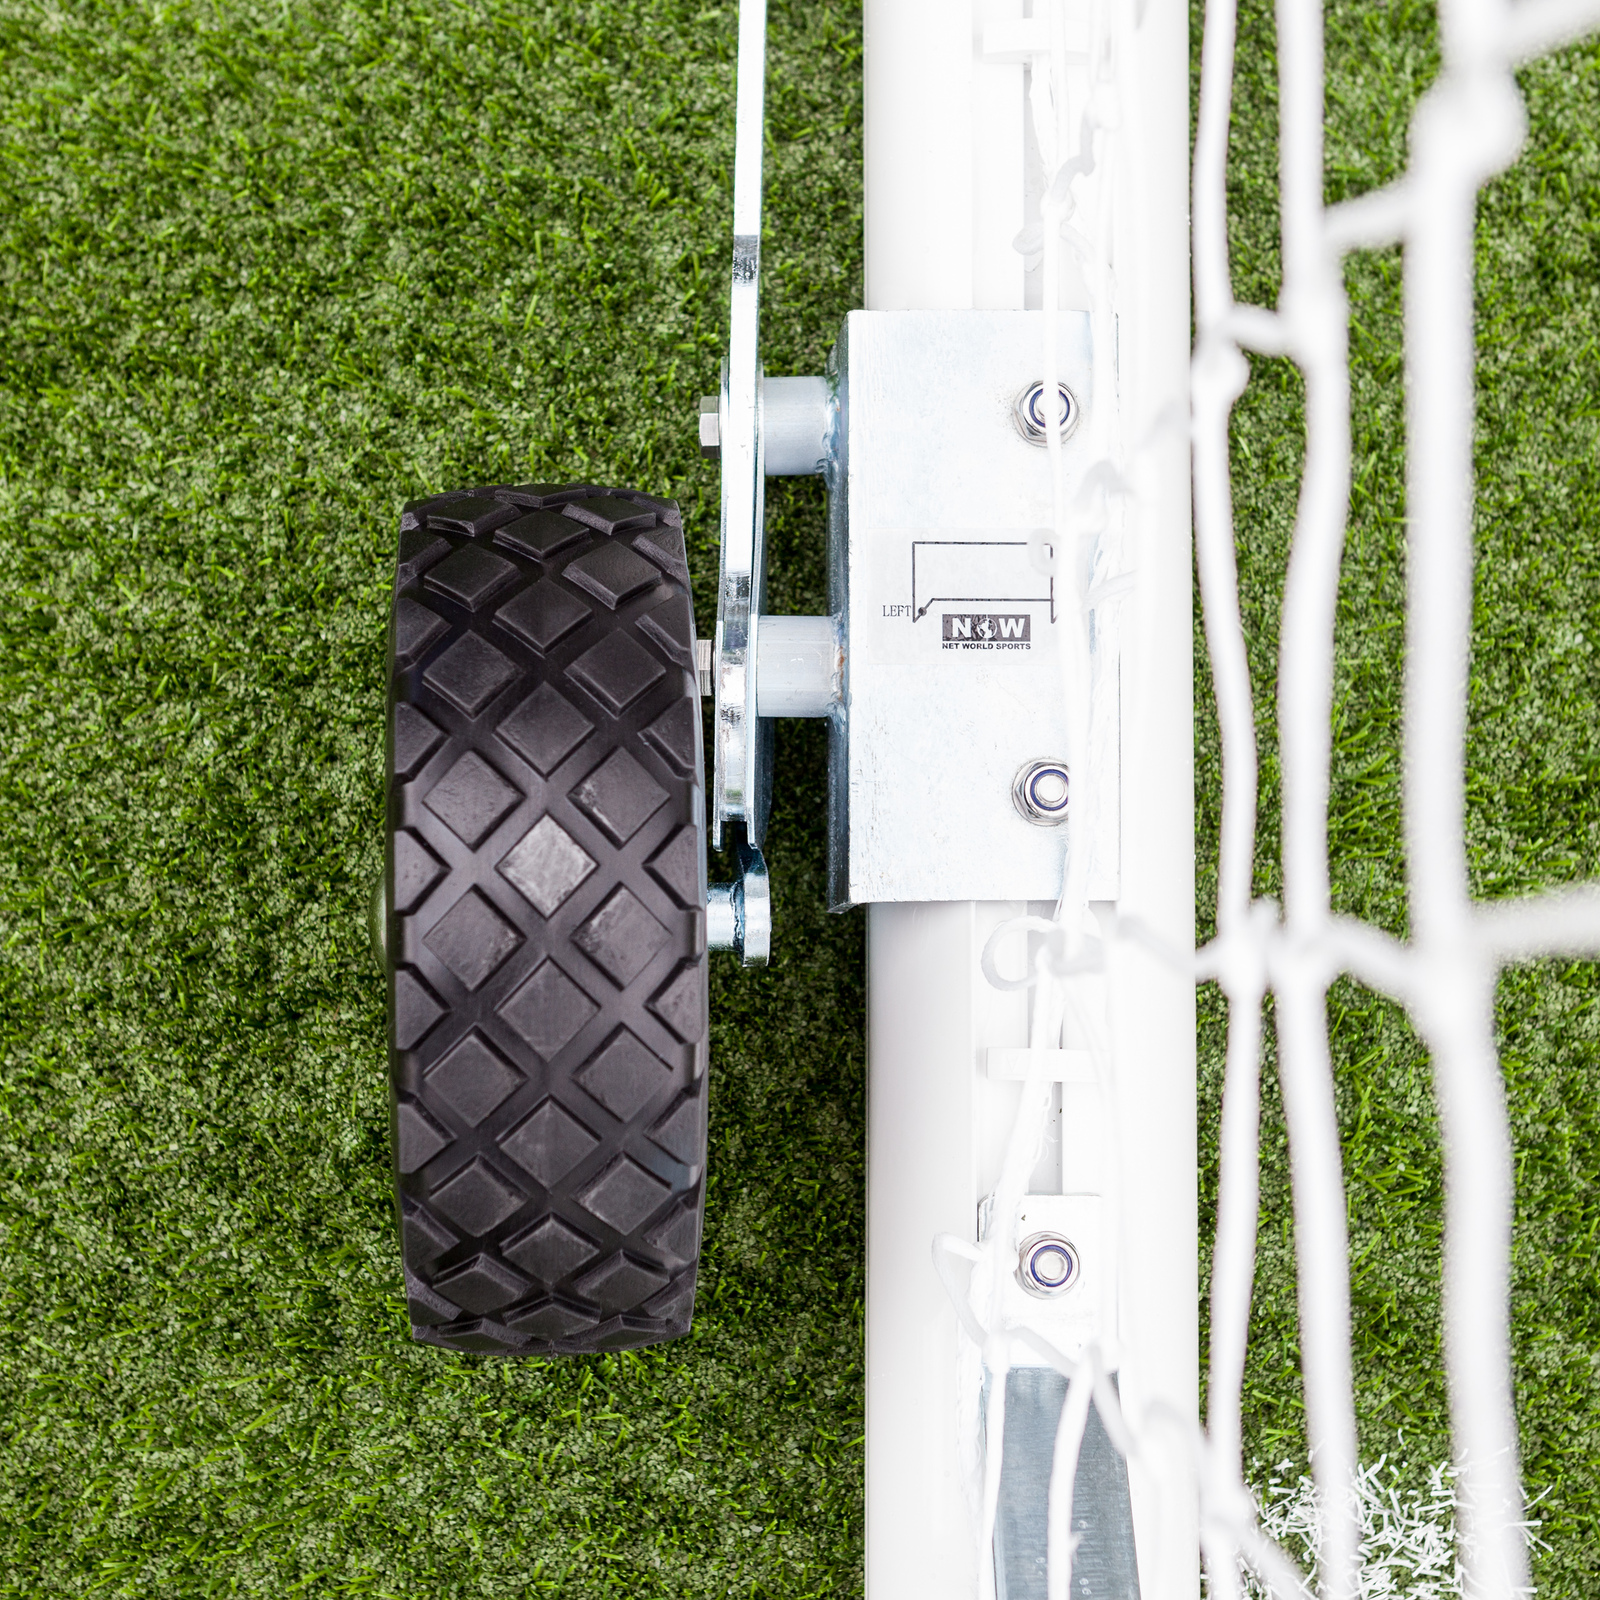 FORZA Alu110 Replacement Soccer Goal Wheel